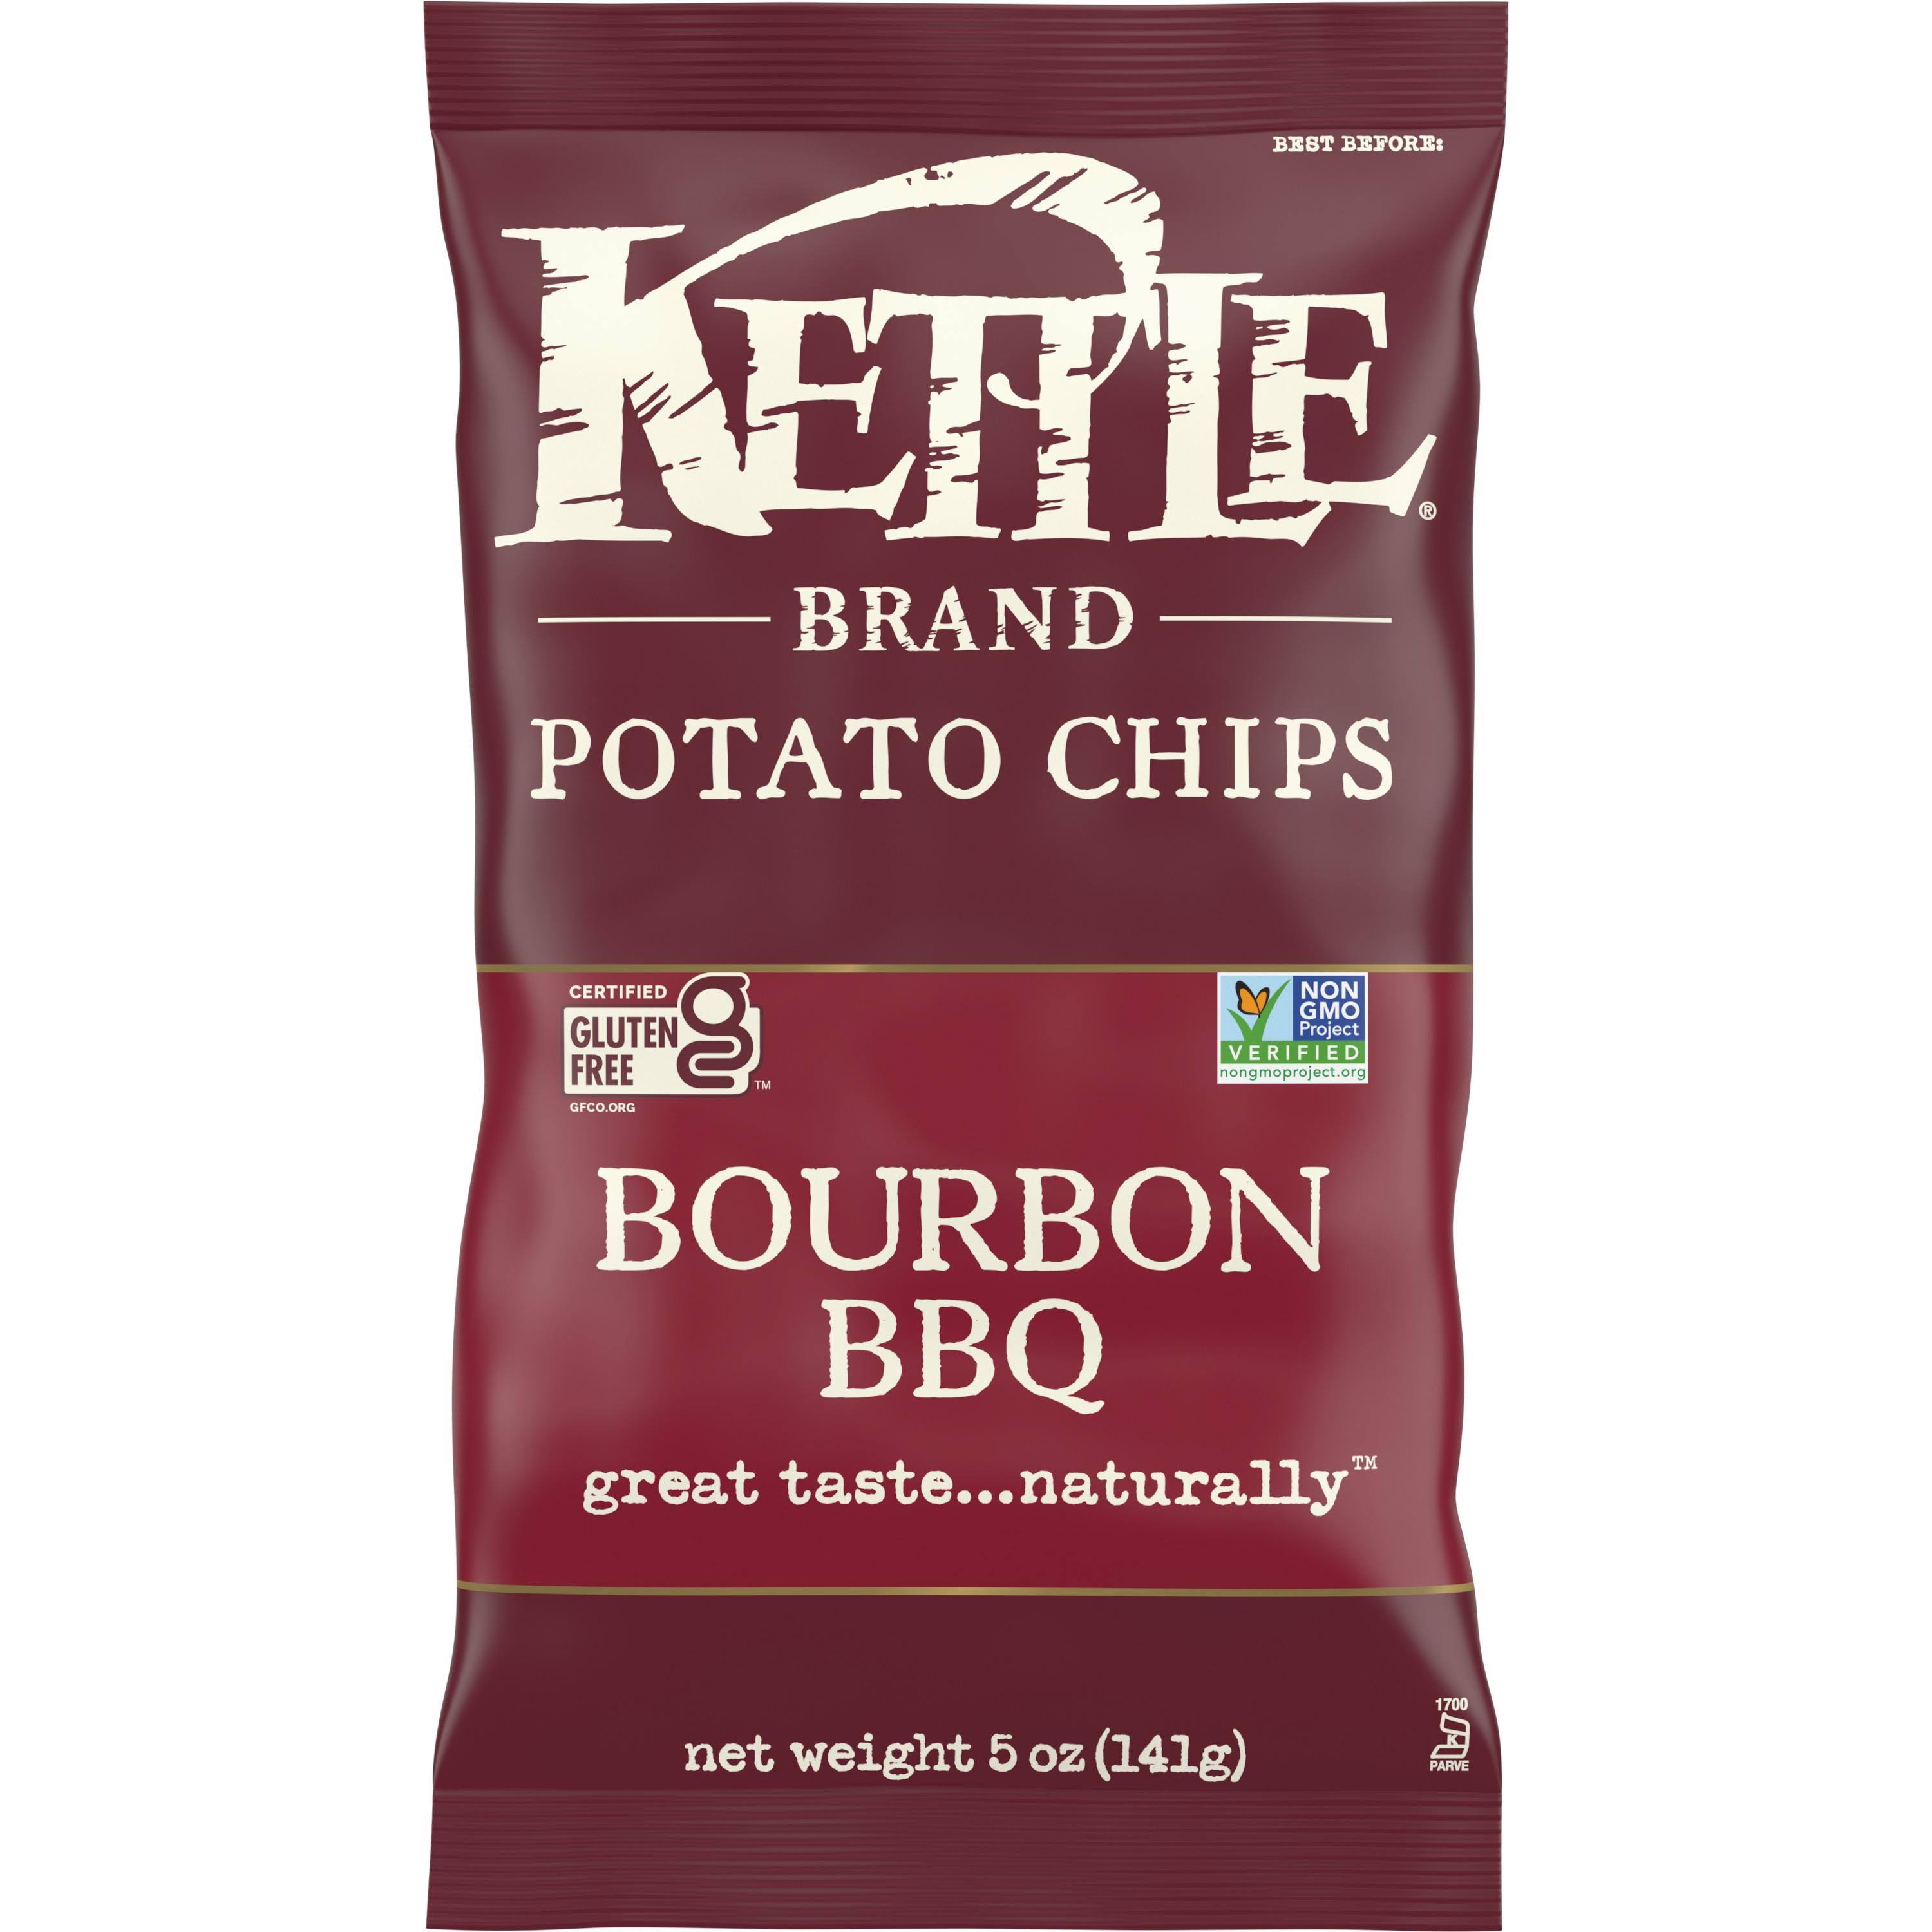 Kettle Potato Chips, Bourbon Bbq - 5 oz